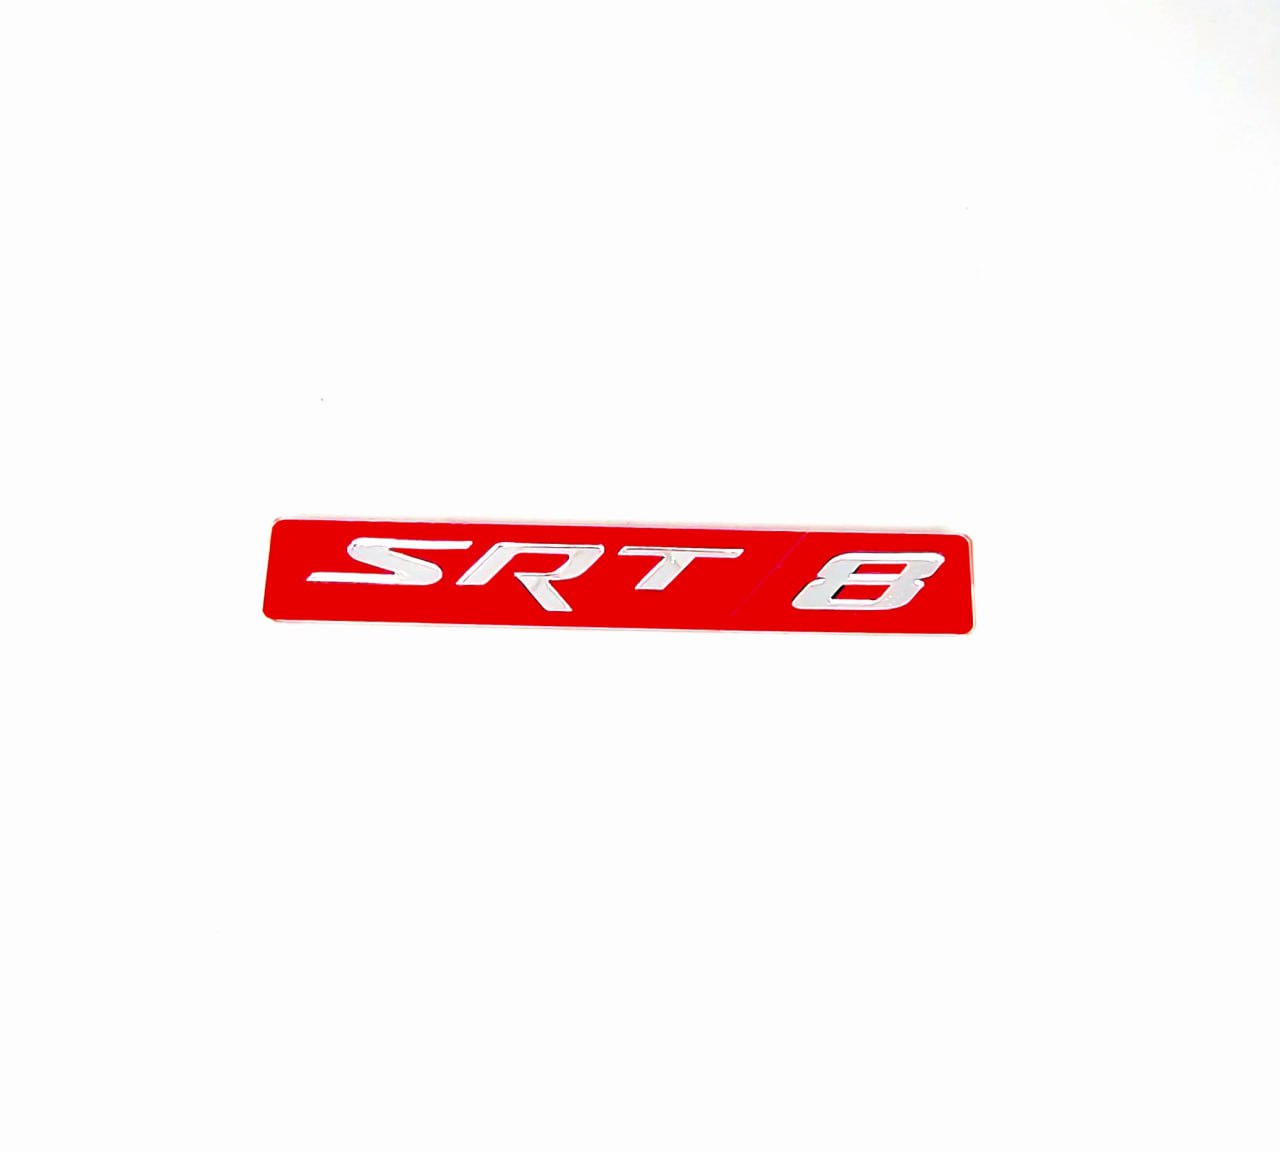 Chrysler Radiator grille emblem with SRT8 logo (Type 4)